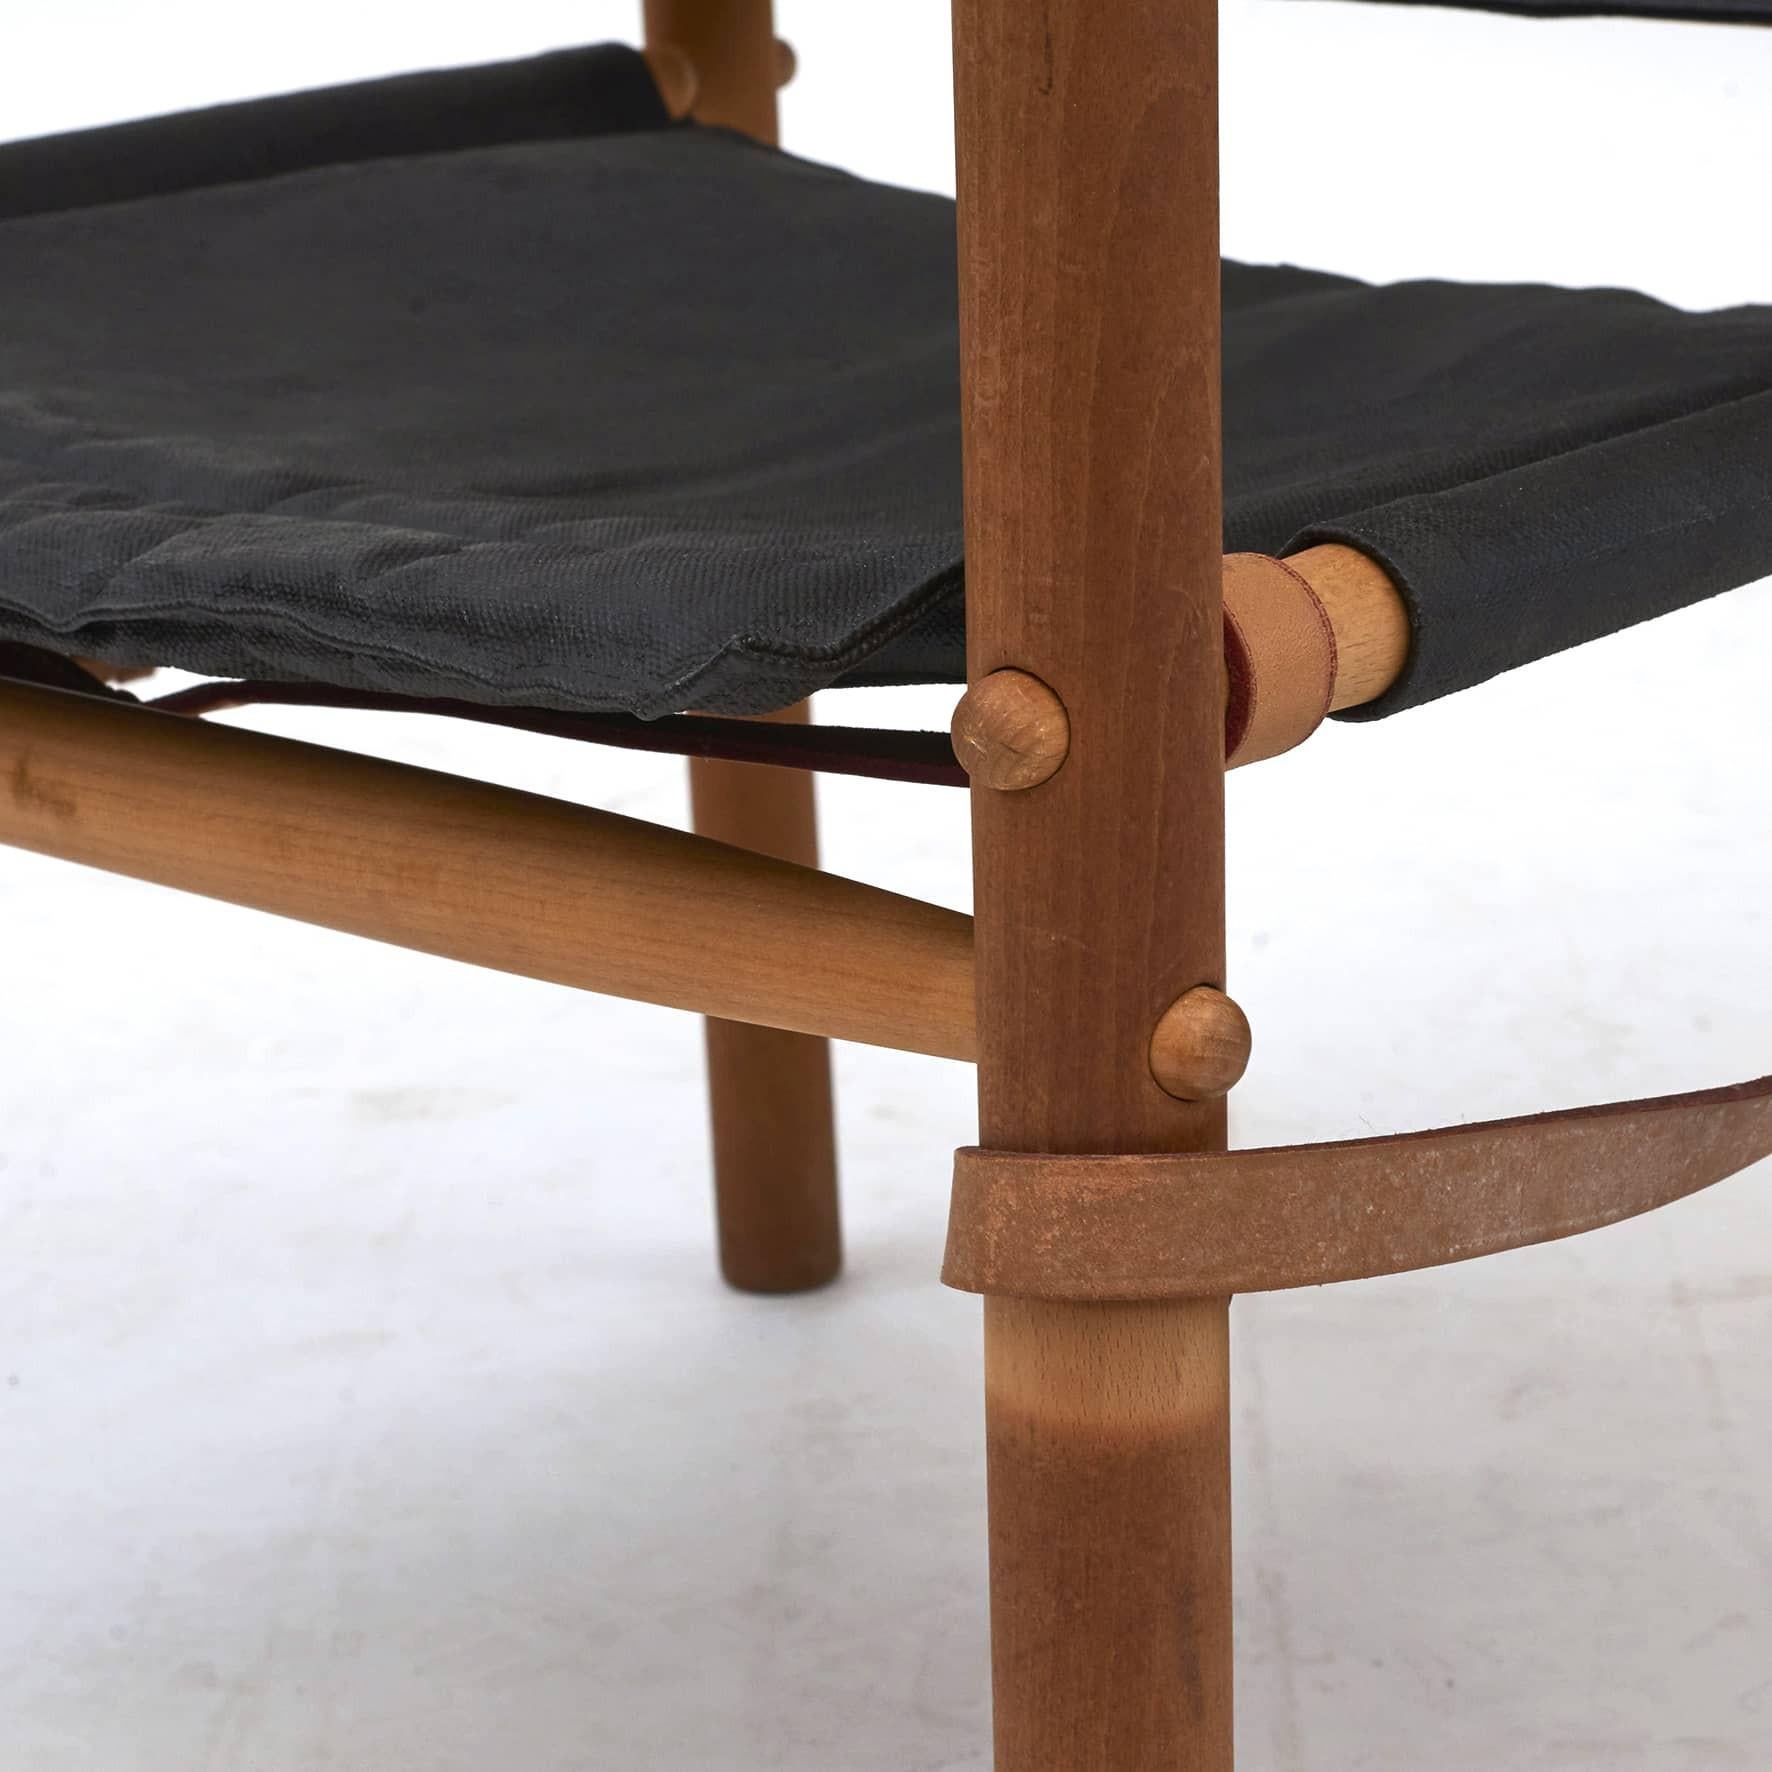 20th Century Pair of Axel Thygesen Oasis Safari Chairs for Interna, Denmark, 1960's For Sale